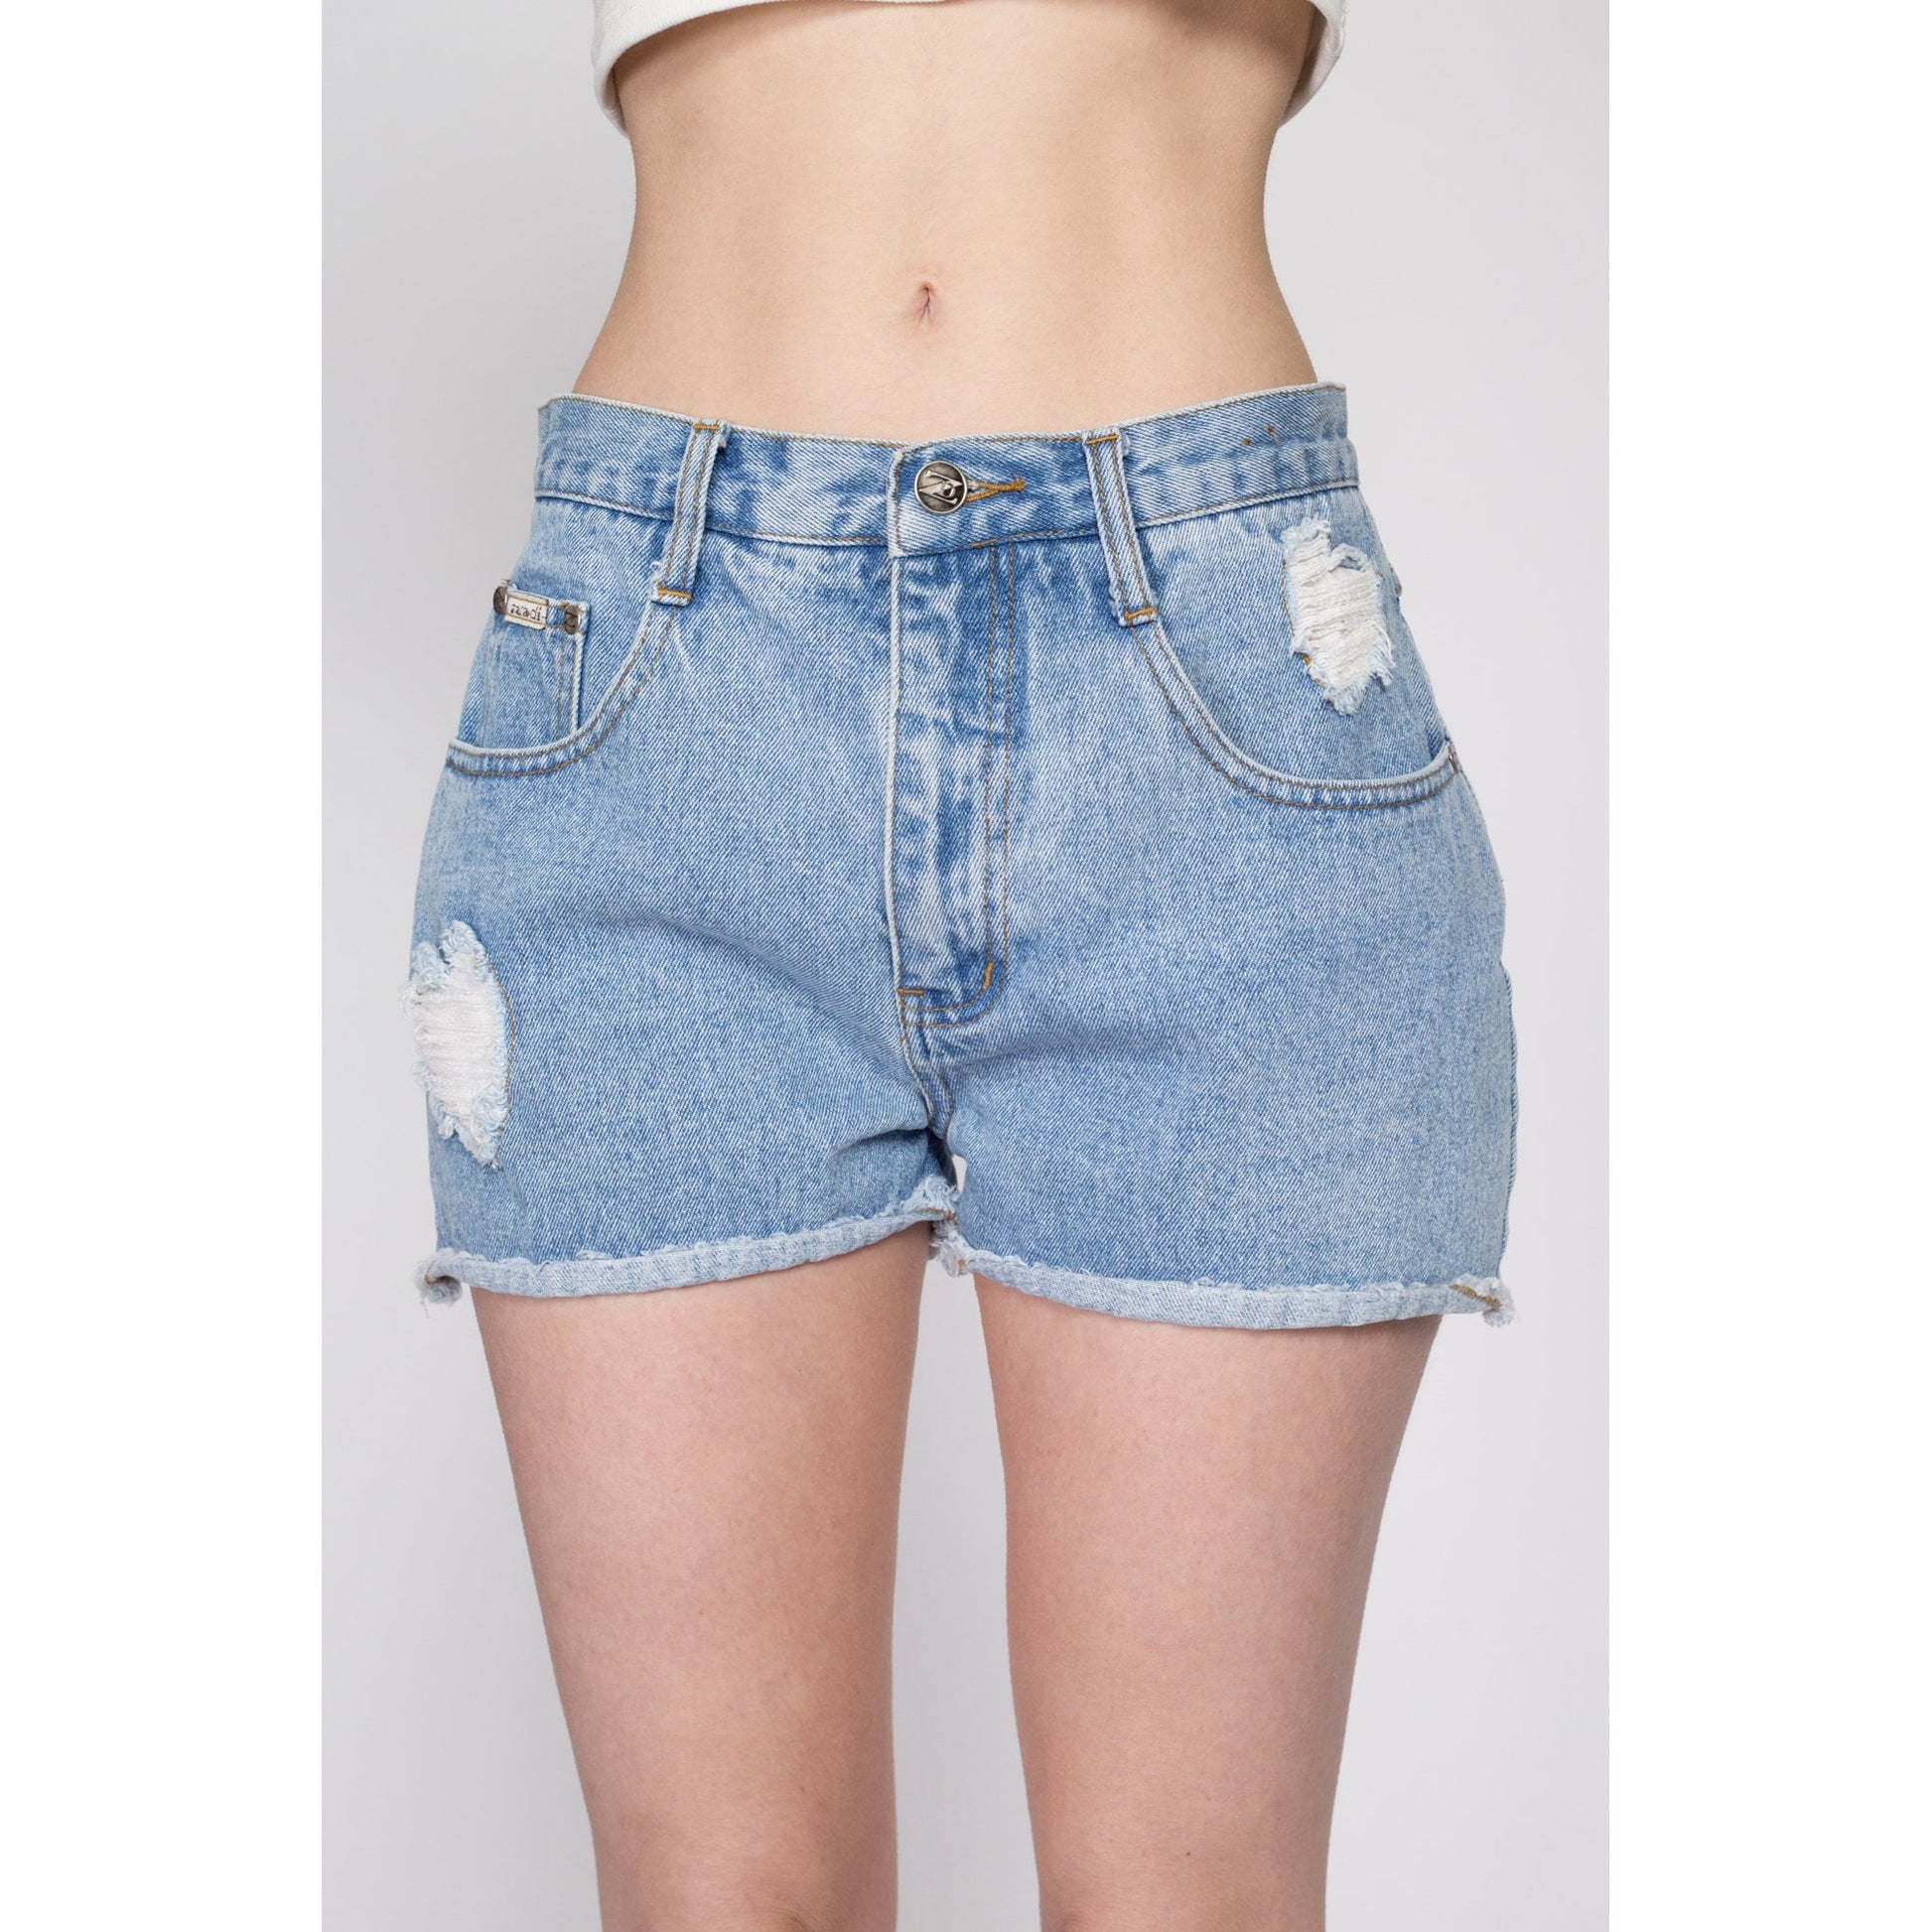 Retro Cut Off Cheeky Jean Shorts - Small